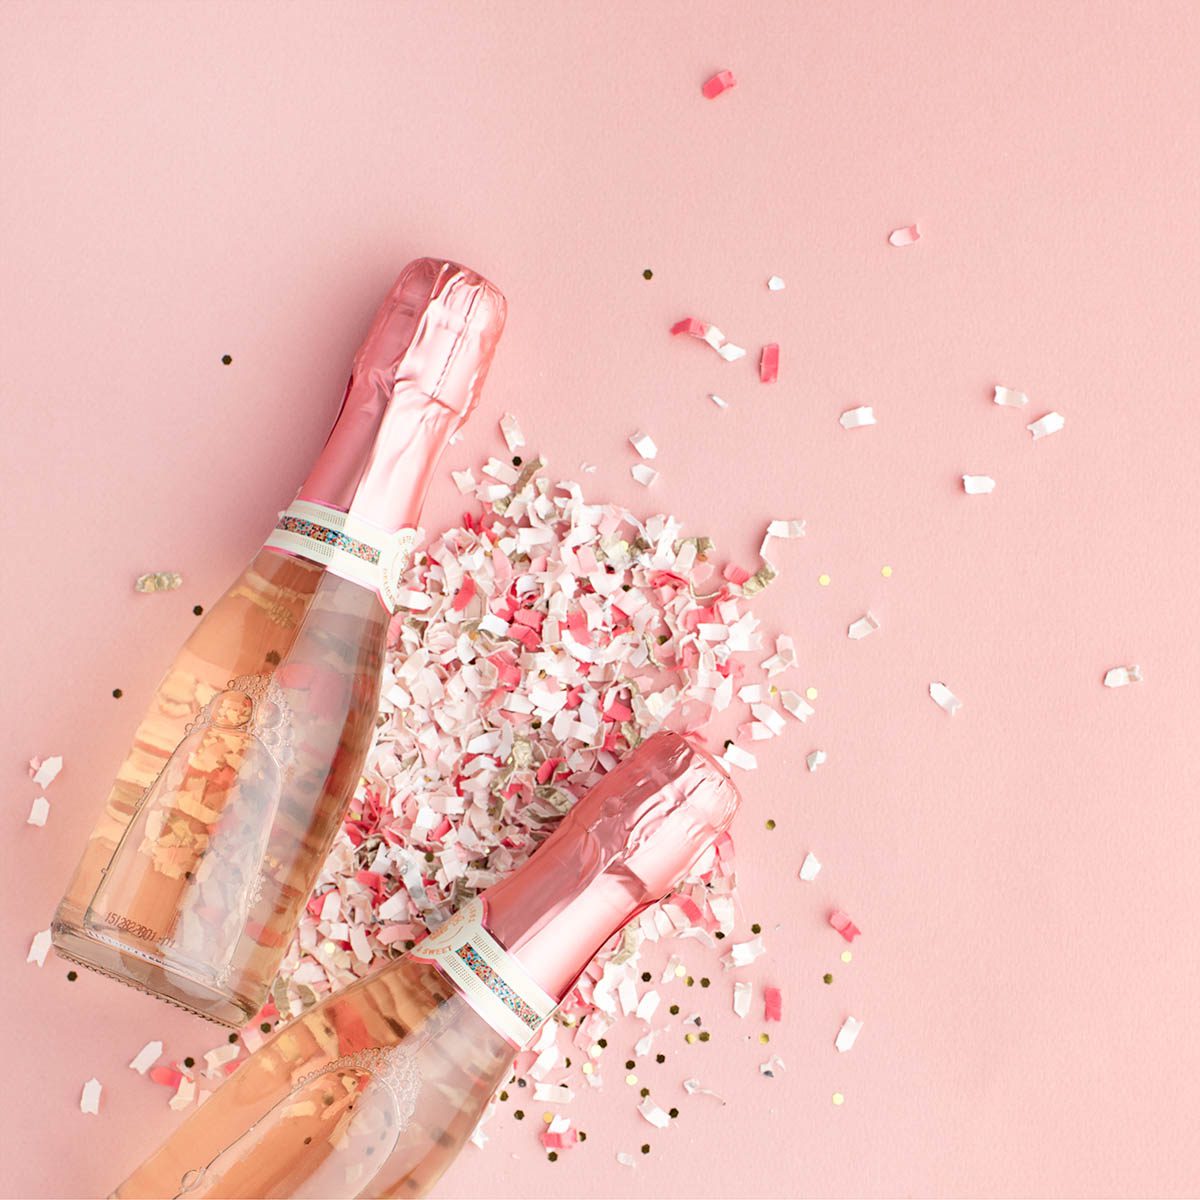 Two mini rose champagne glasses with confetti around them